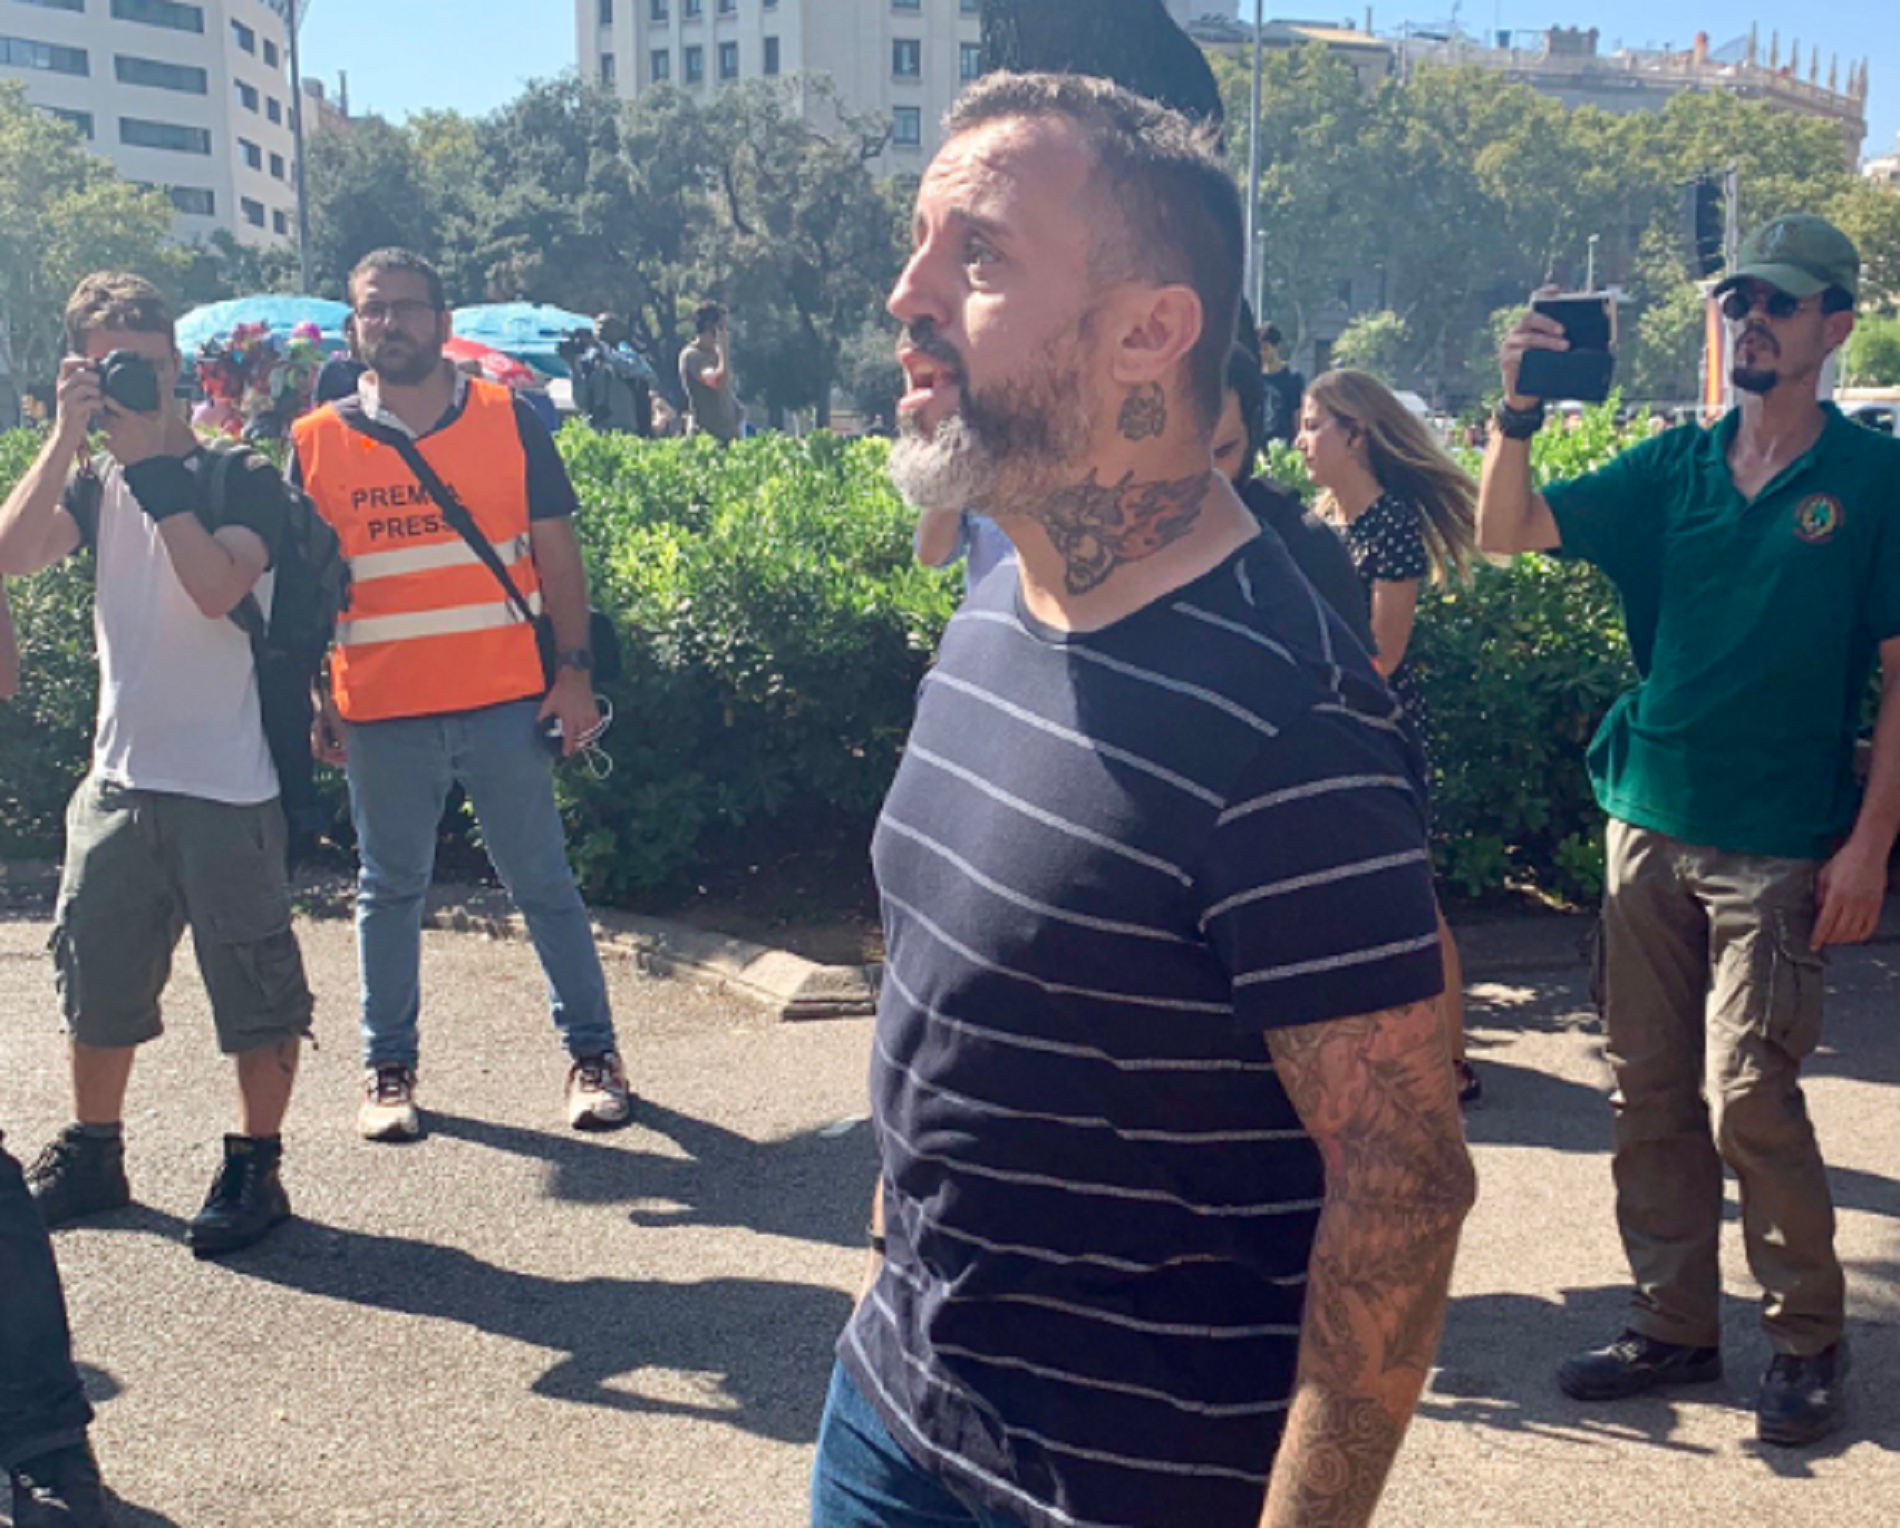 Nazi tattoo on display at Spanish police rally in Barcelona